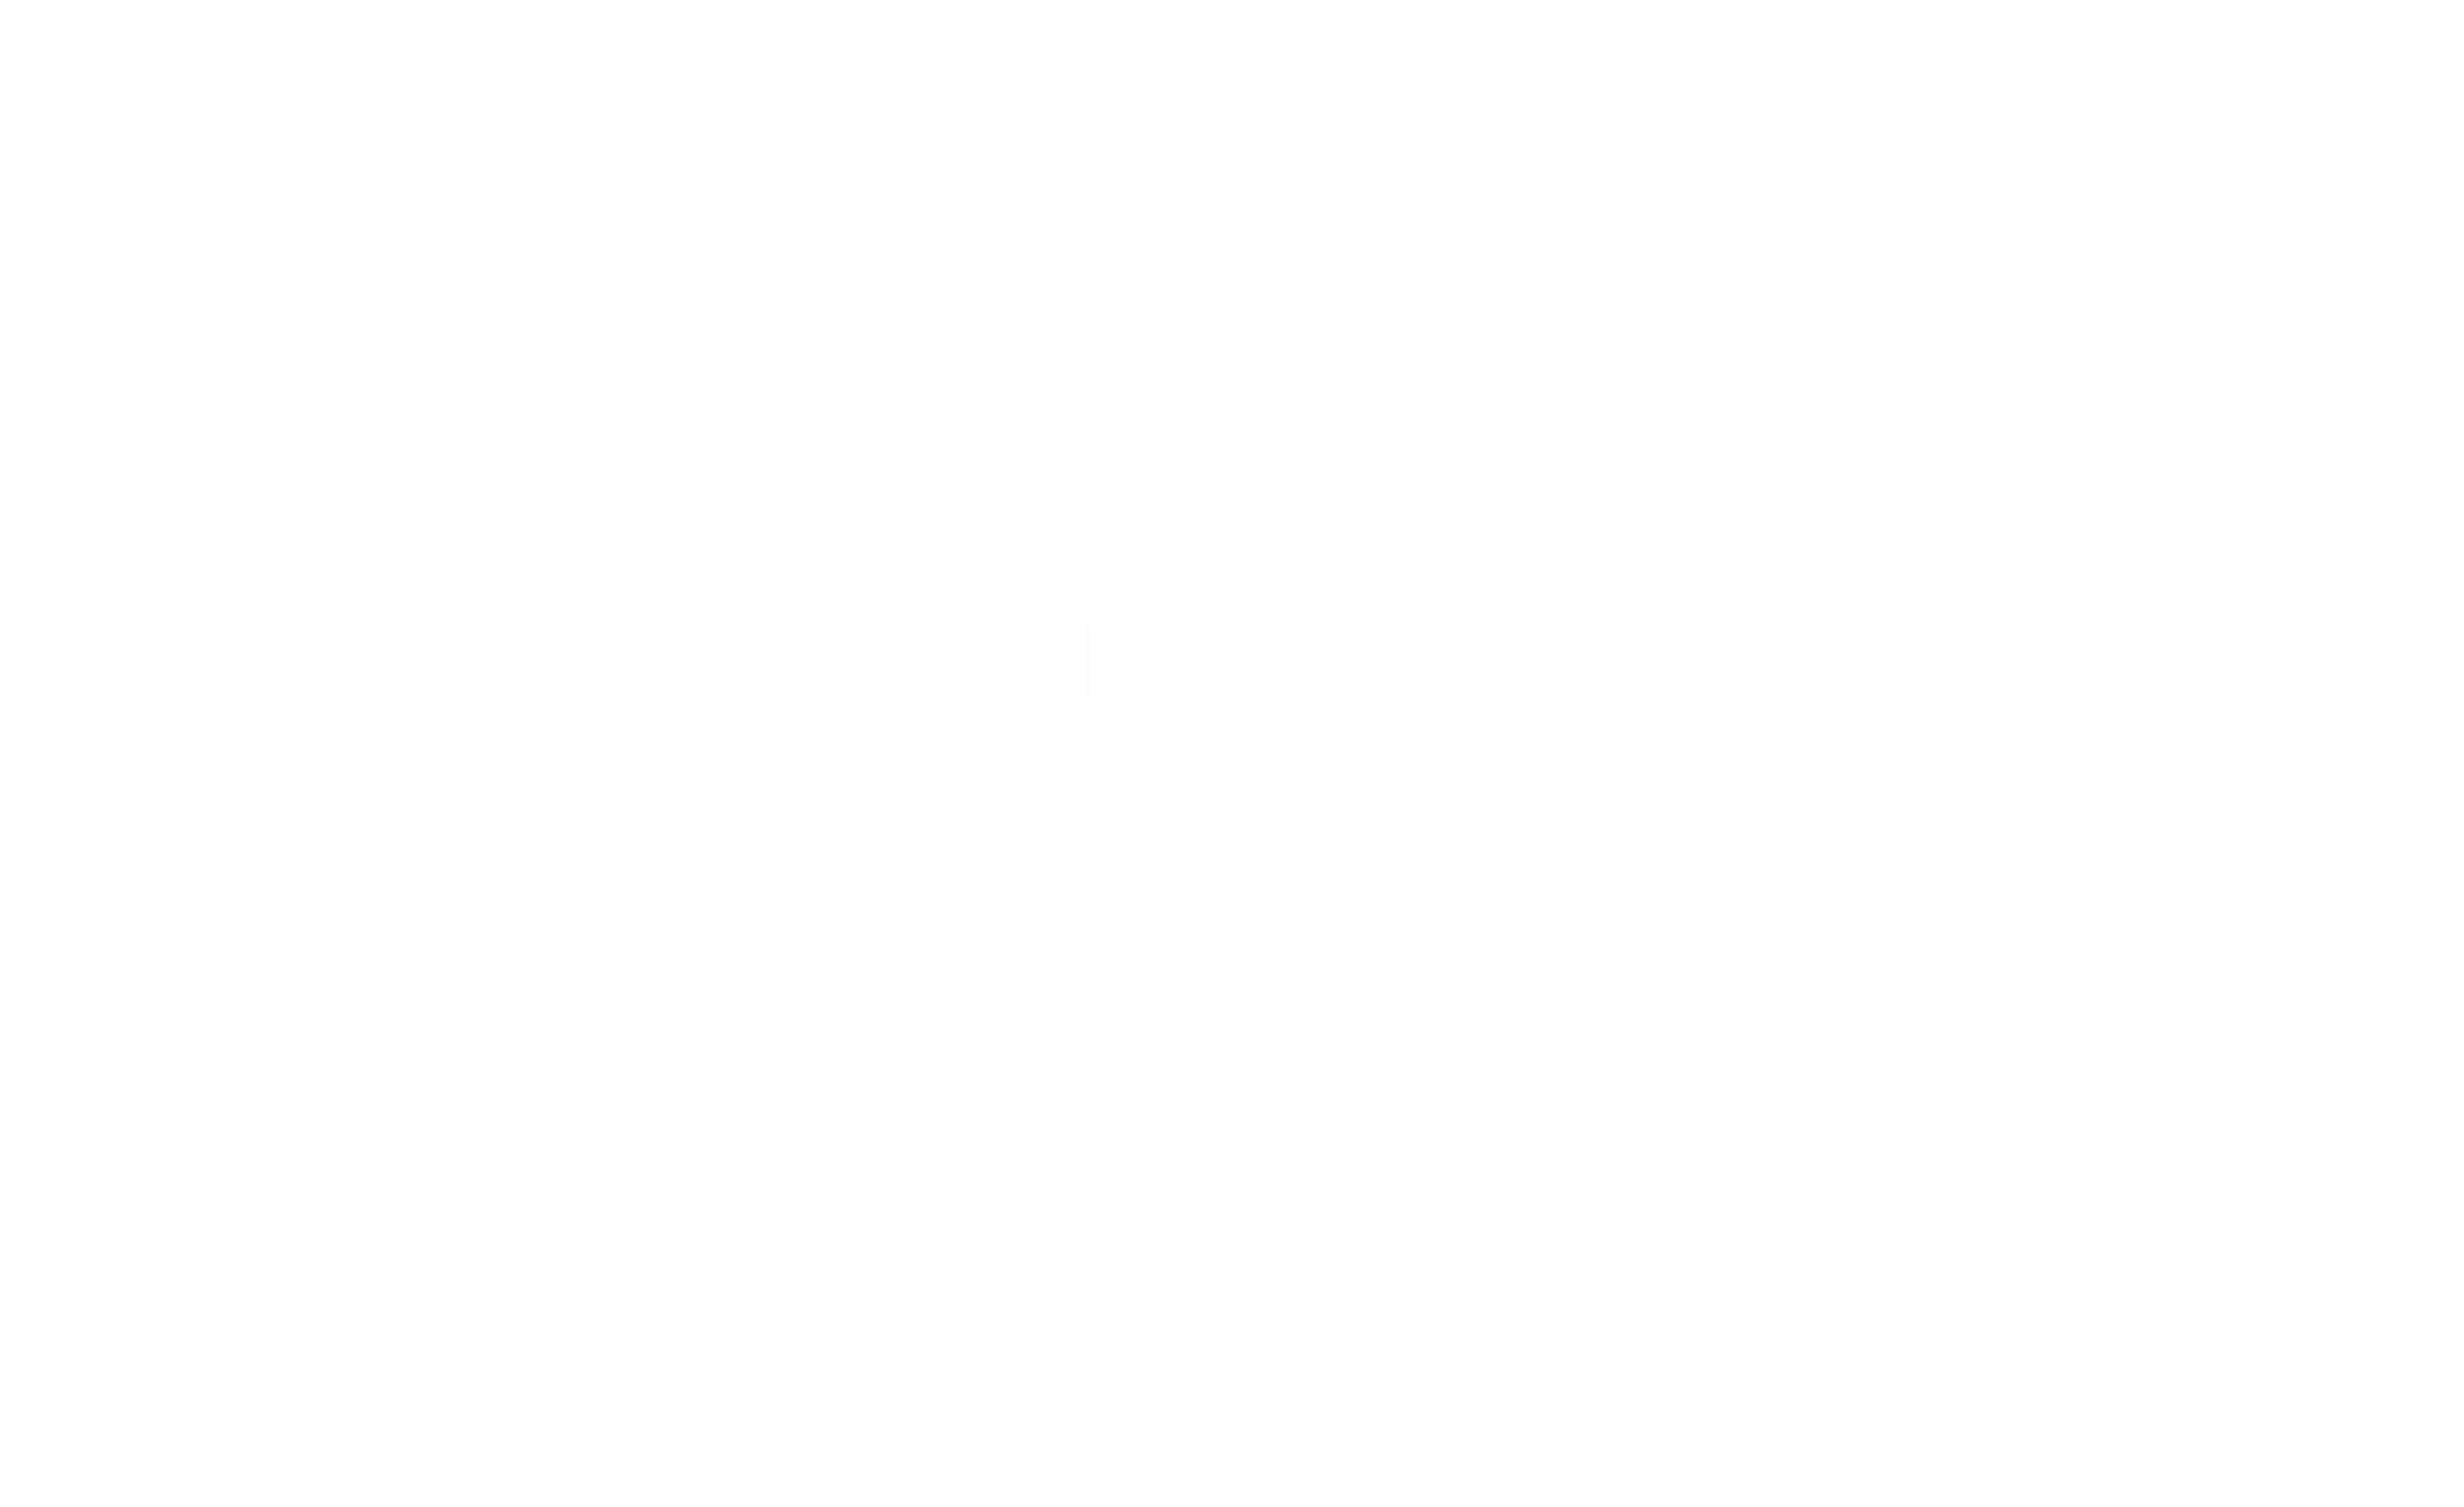 Veranda service